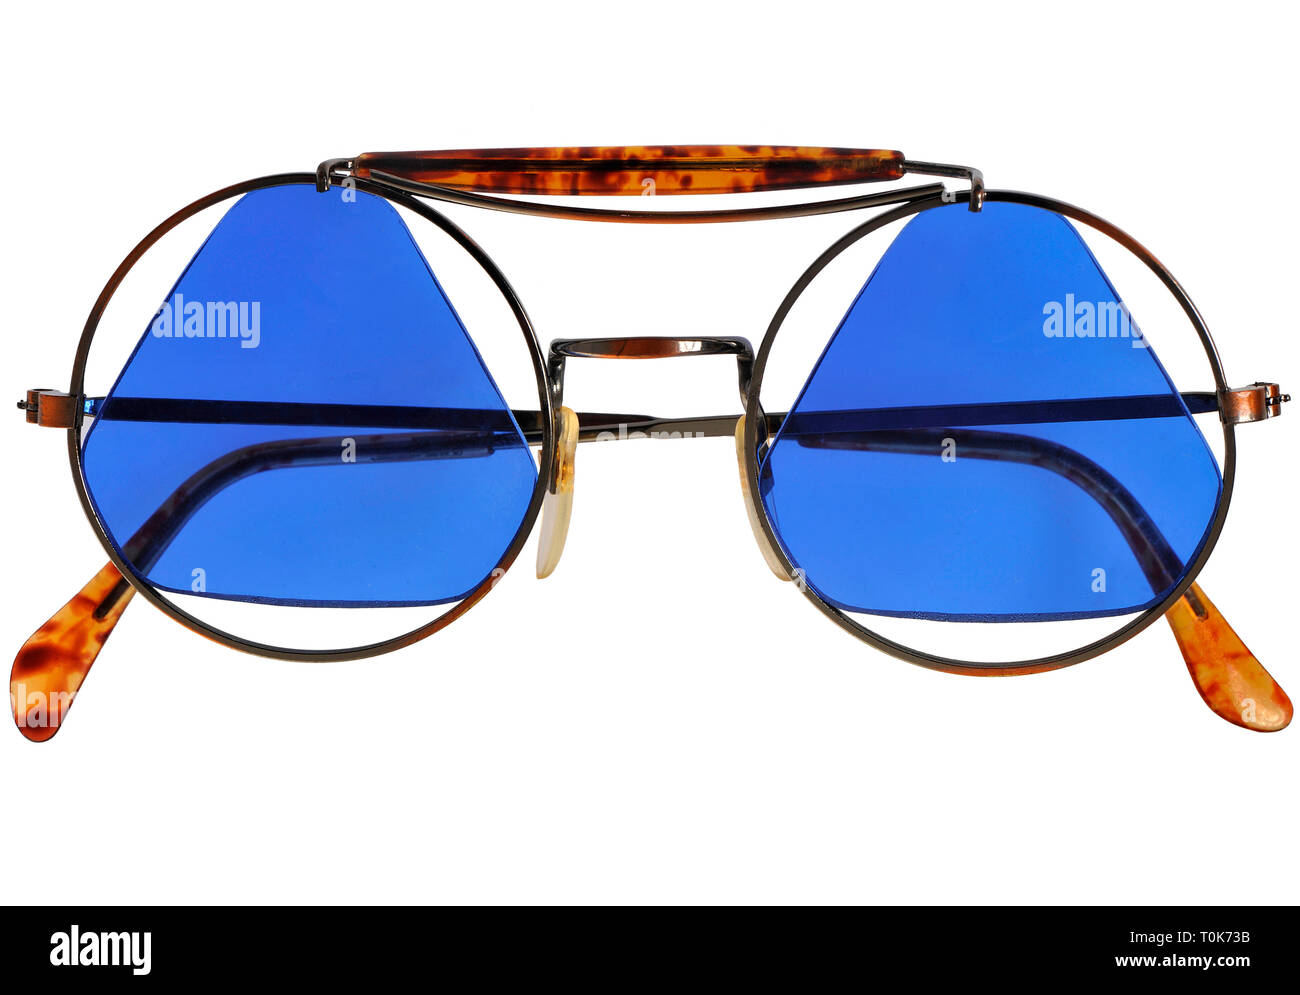 Mode, Accessoires, Sonnenbrillen, blaue Brillen Glas, dreieckige,  Deutschland, ca. 1963,- Additional-Rights Clearance-Info - Not-Available  Stockfotografie - Alamy